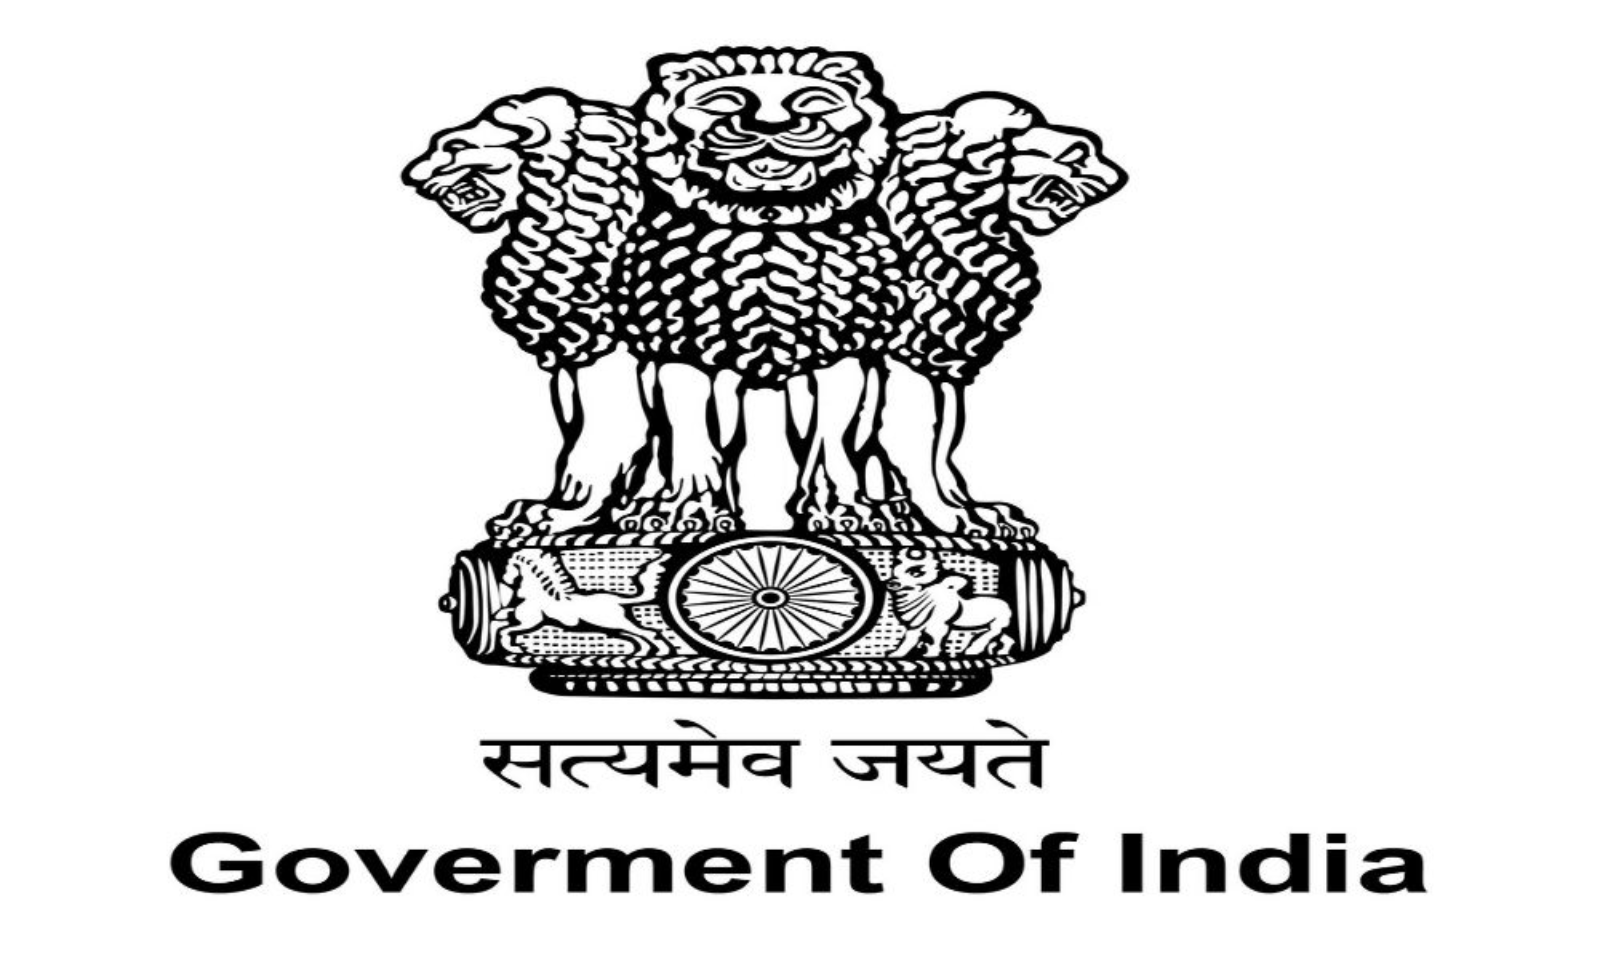 Emblem of India Logo PNG Images (Transparent HD Photo Clipart) | India logo,  Photo clipart, Emblems